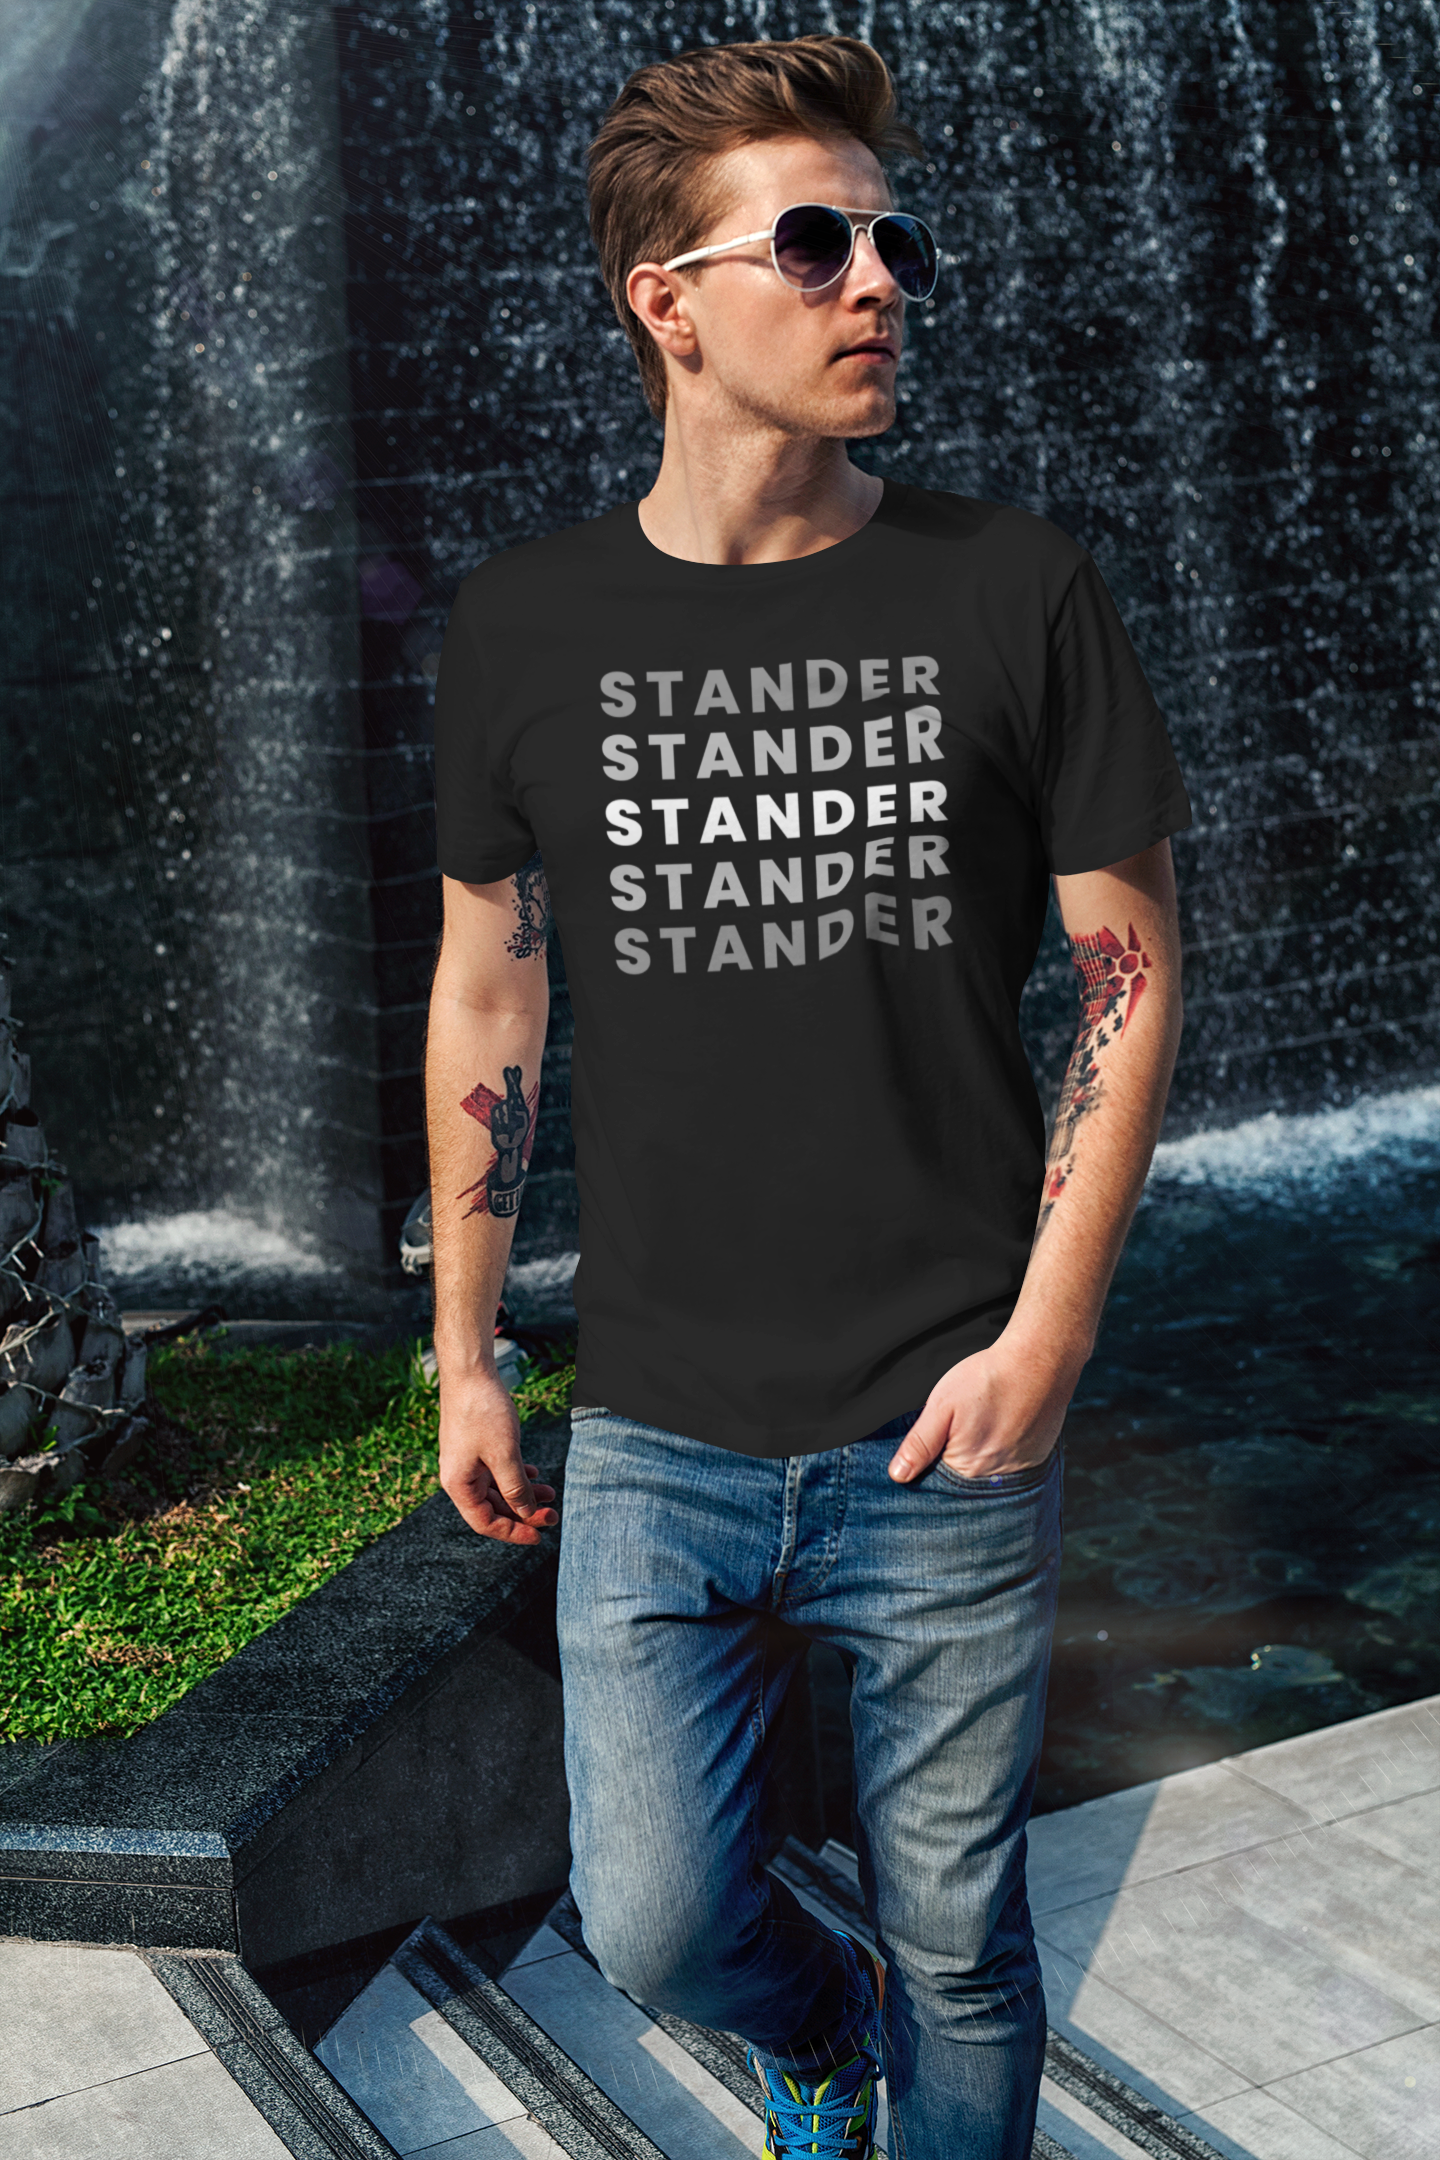 "Stander" T-Shirt (Ash, Black, Soft Cream, Asphalt, Pink & Heather Red Available)